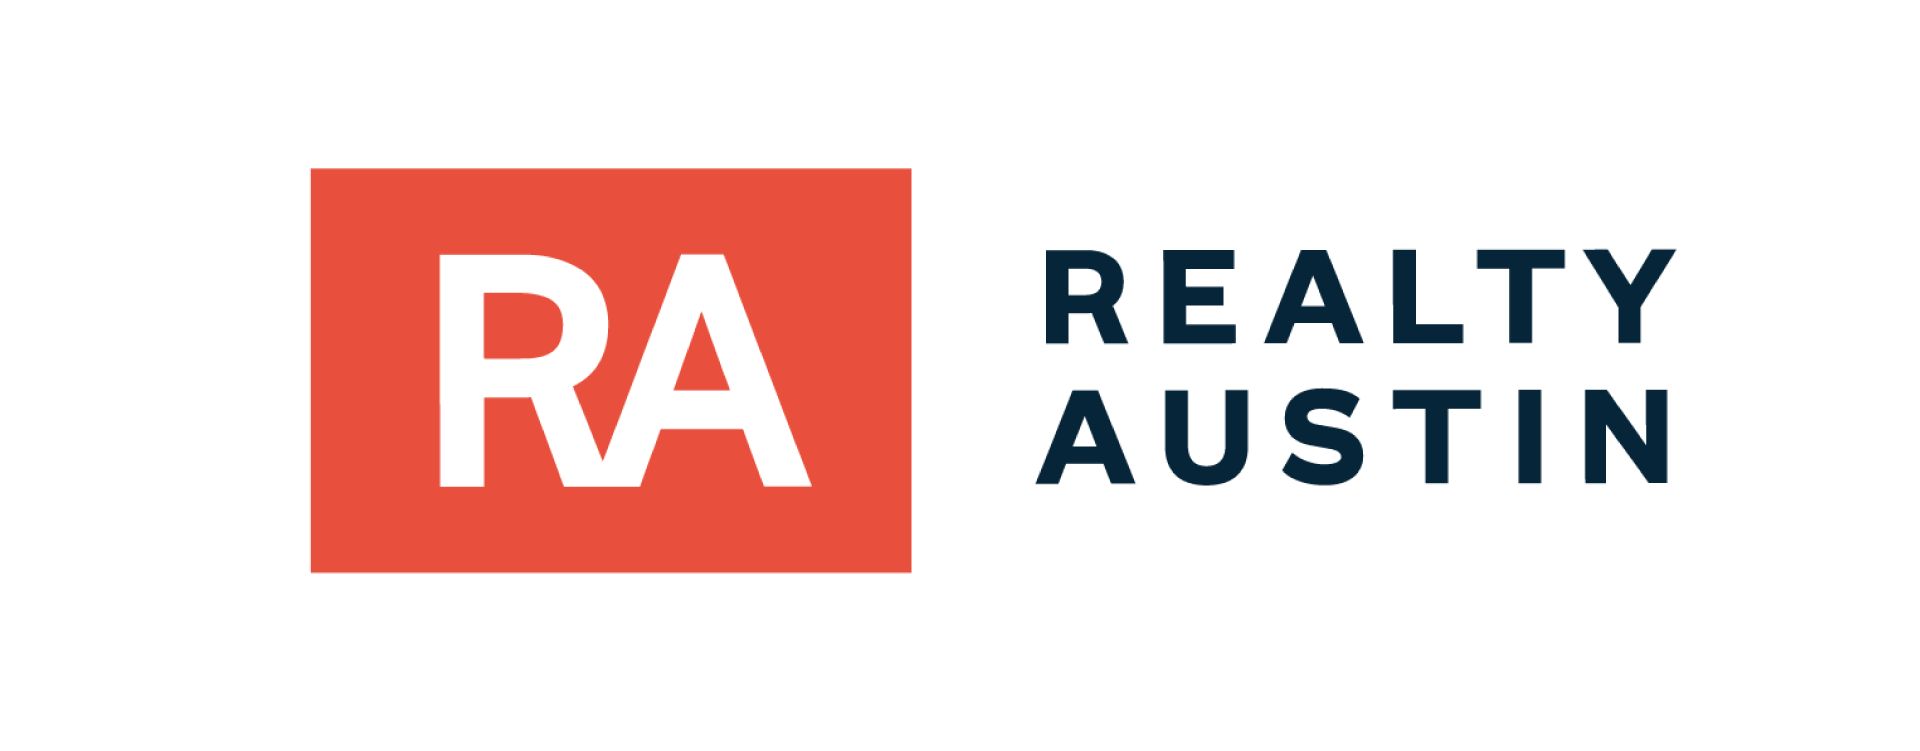 realty austin logo